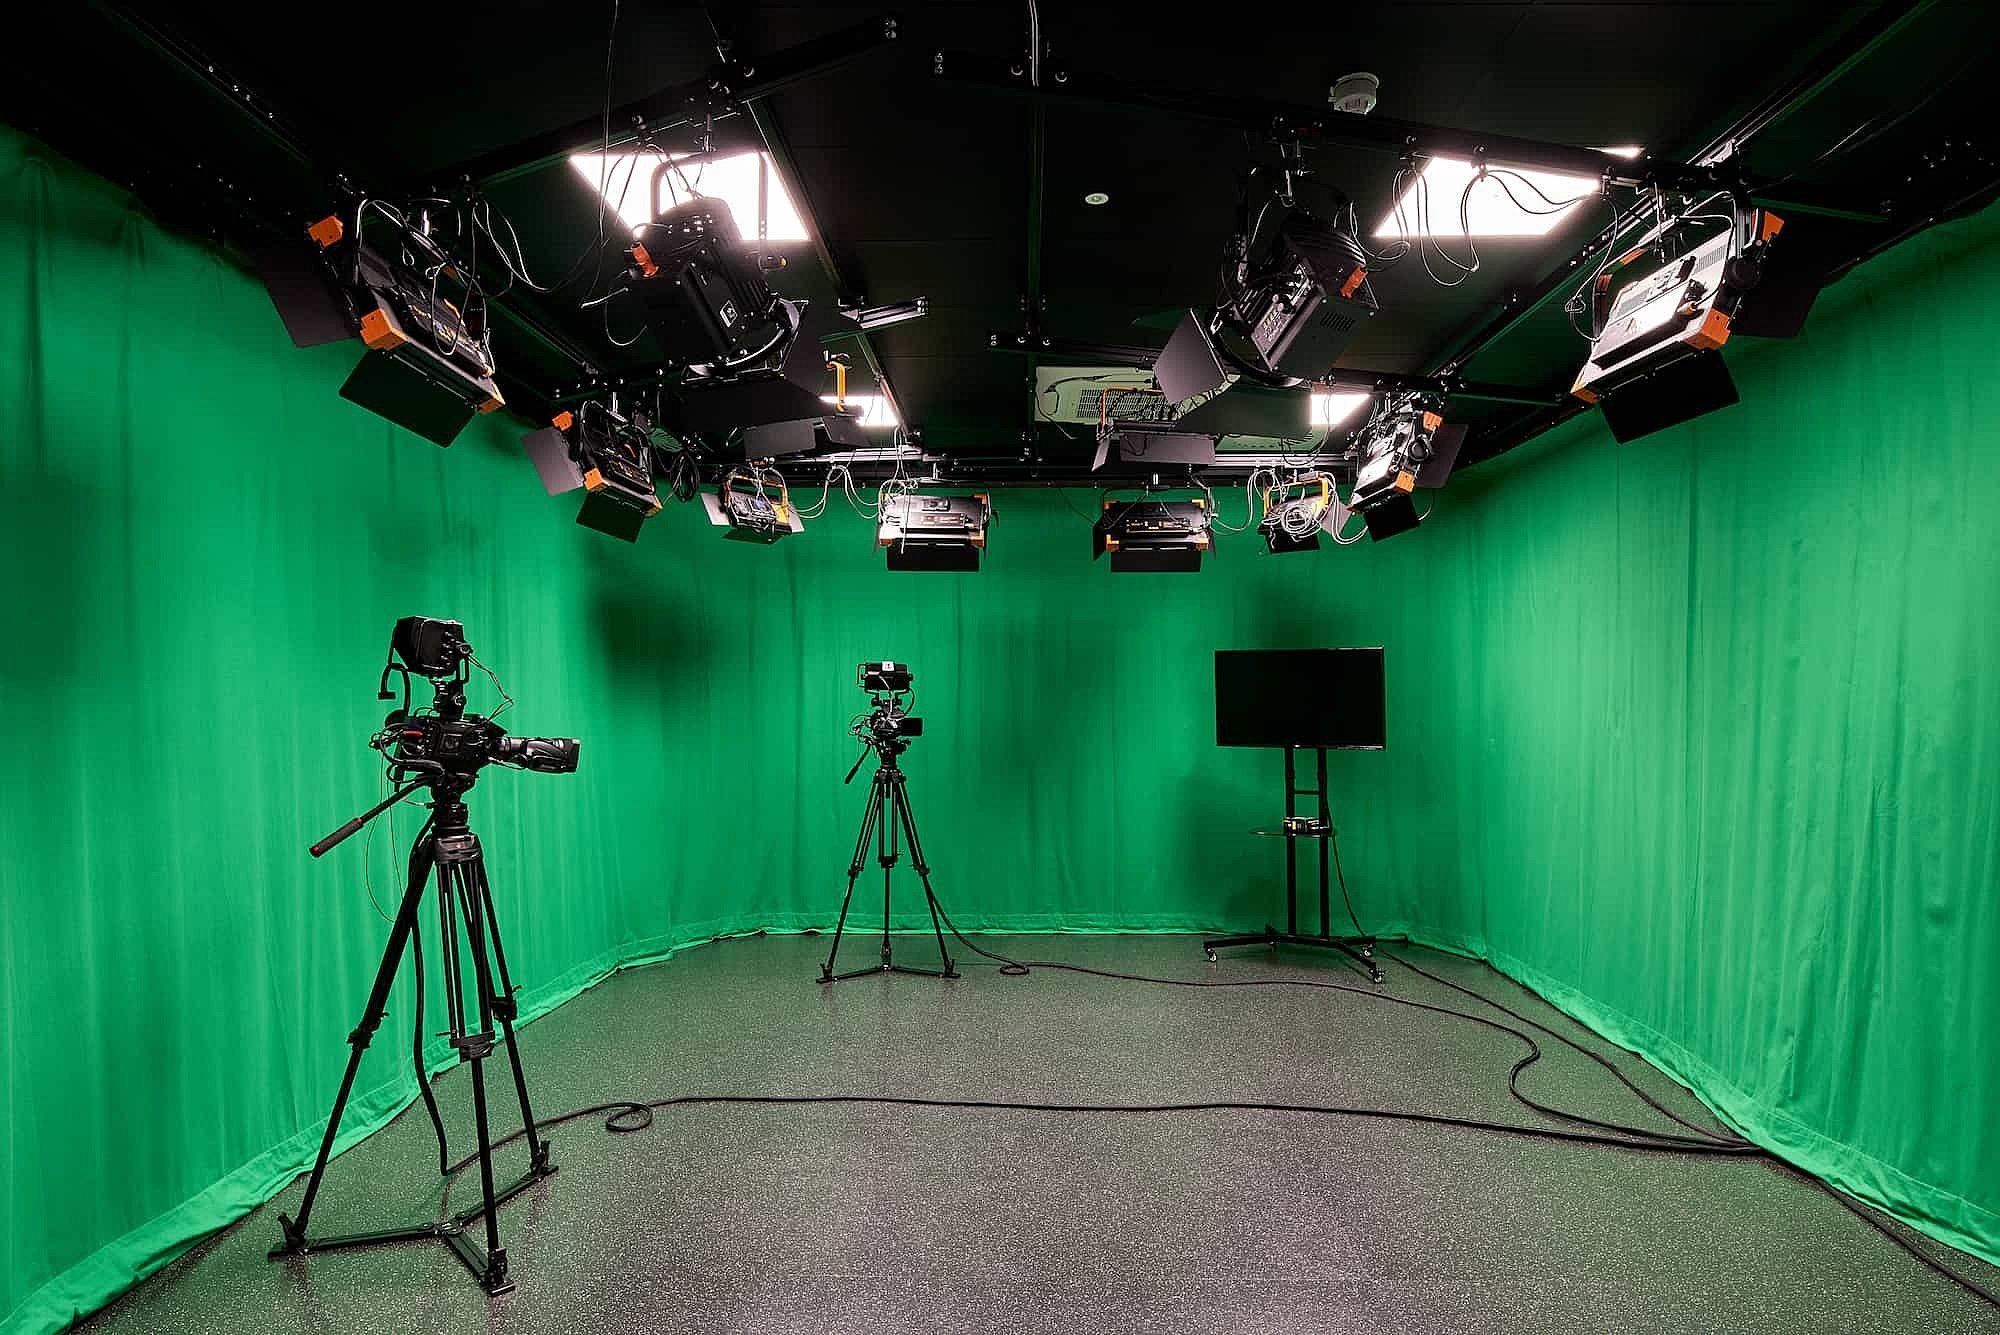 Dudley College greenscreen motion capture suite